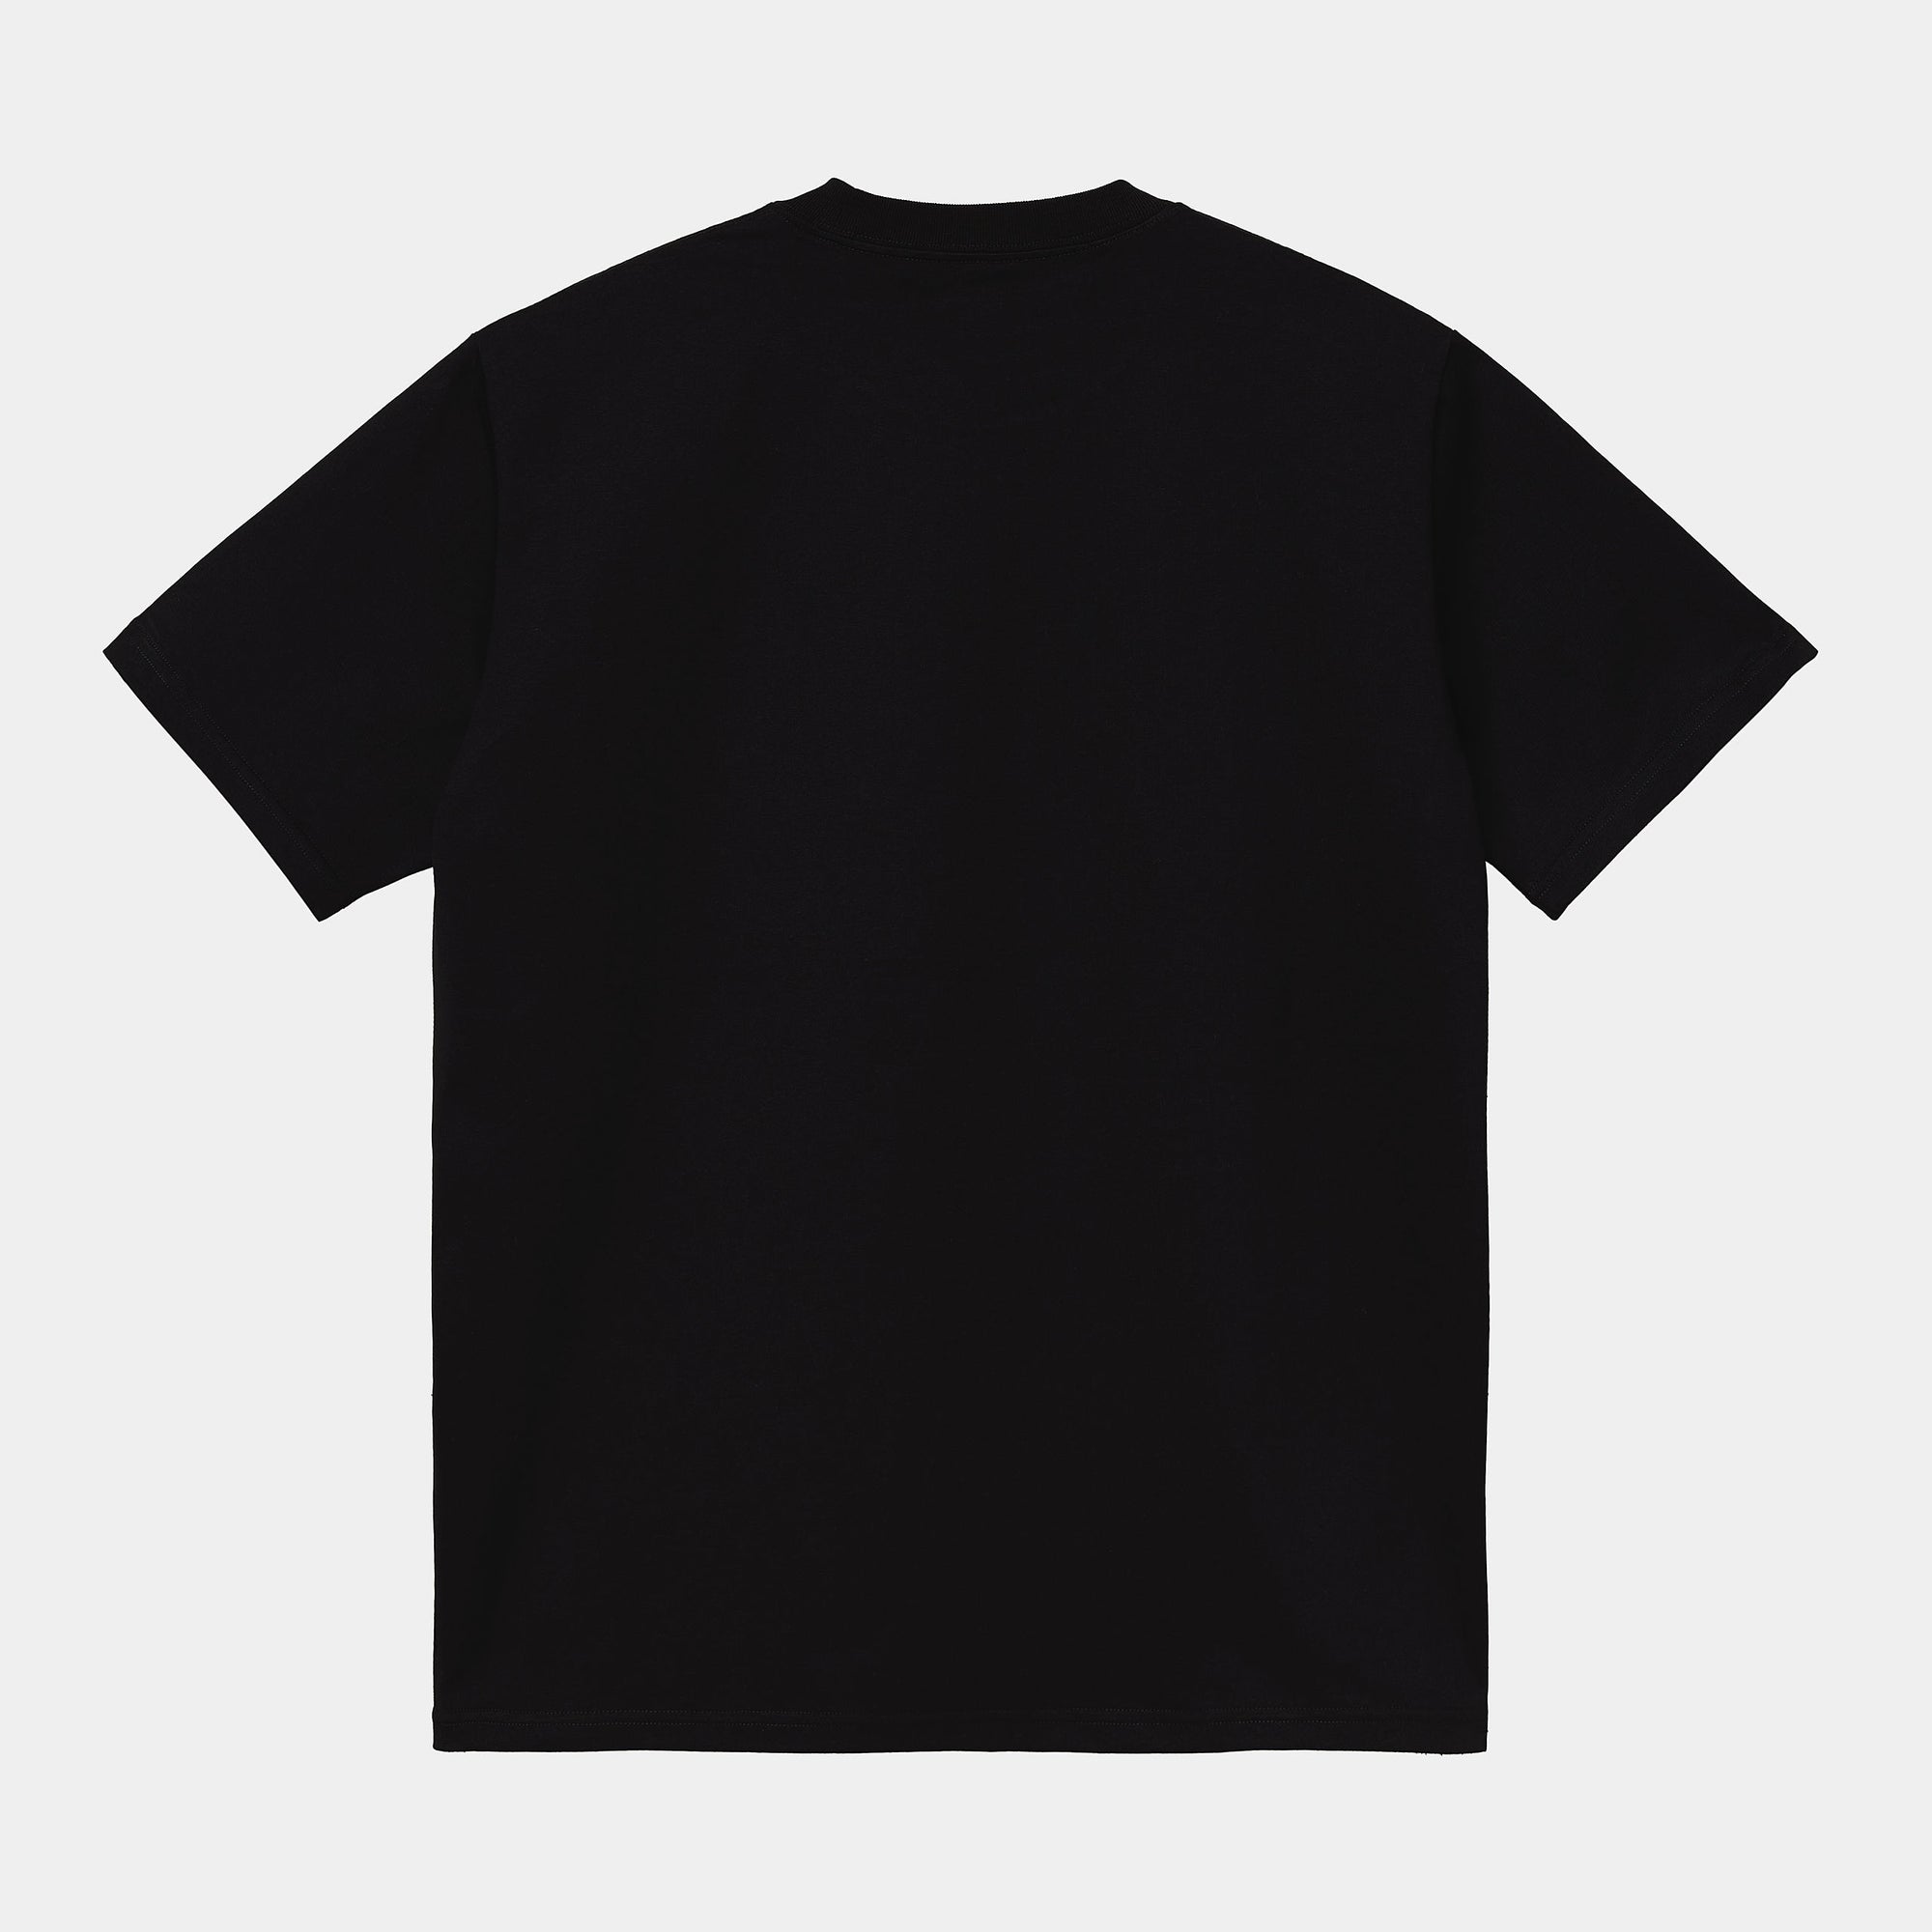 S/s University T-shirt Black / White